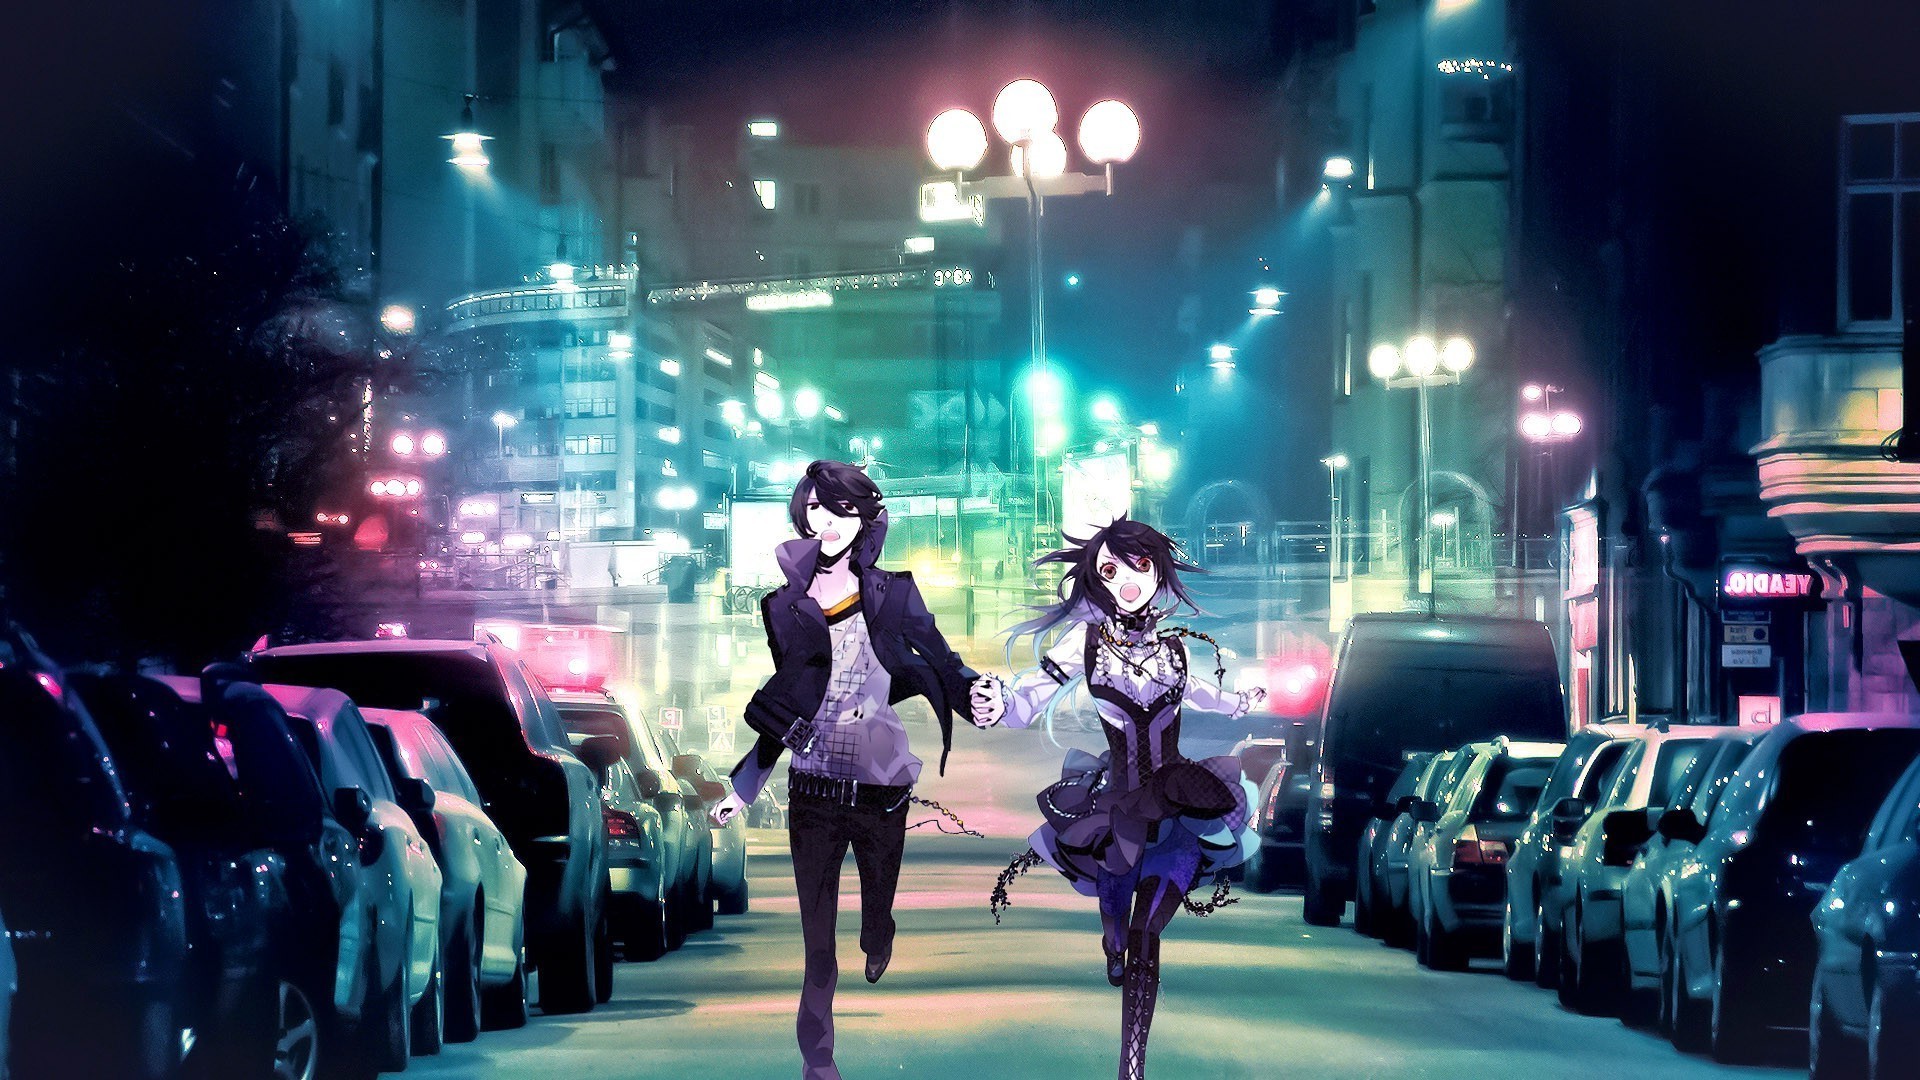 1920x1080 fantasy art anime city street lights colorful wallpaper JPG 526 kB. Mocah HD Wallpaper